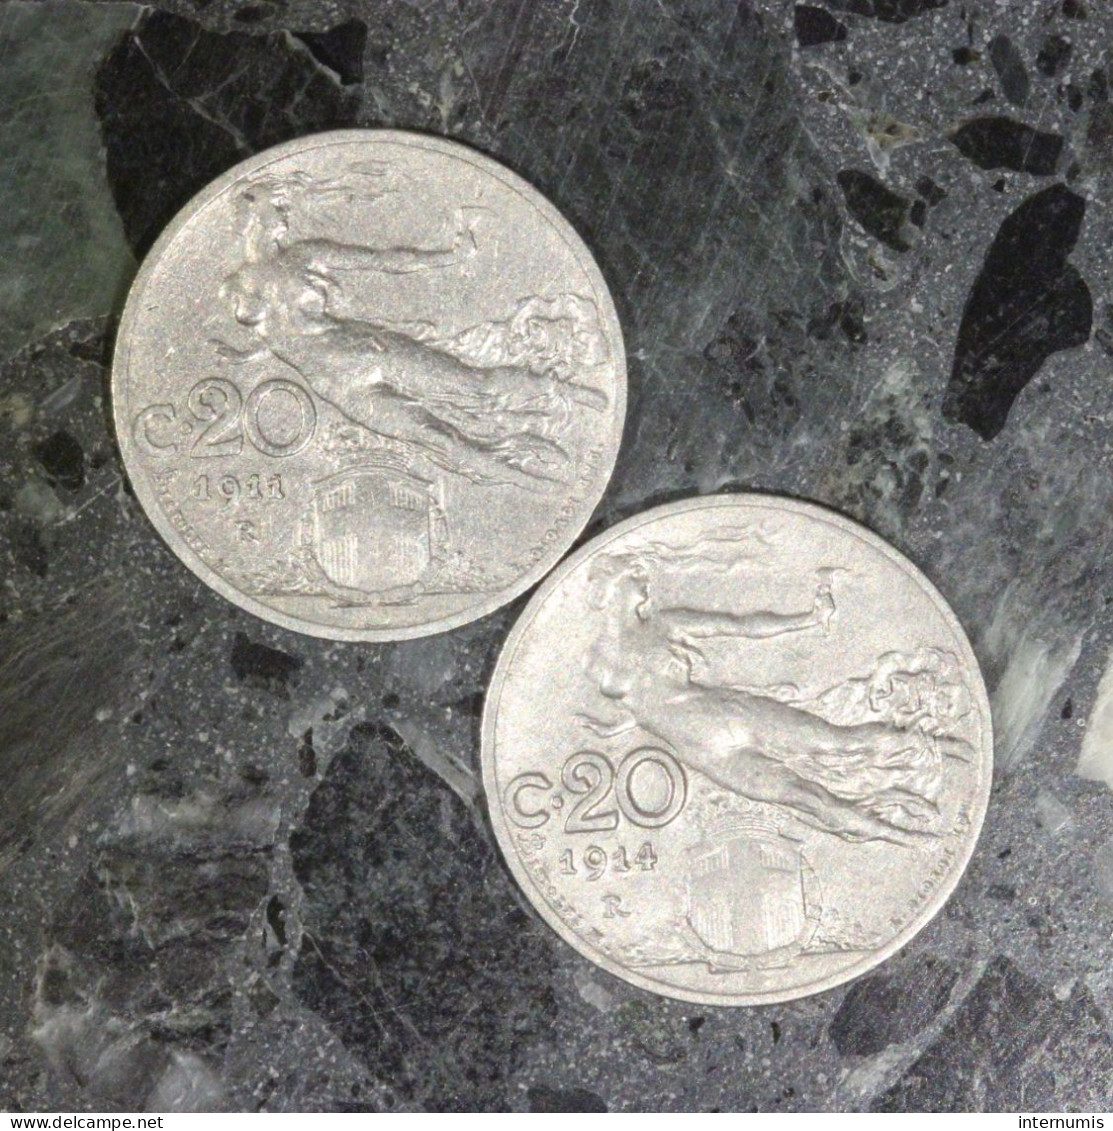 LOT (2) : 2 Centesimi 1911-R & 1914-R Italie / Italy, , 20 Centesimi , 1911 & 1914, , Nickel, ,
KM# - Vrac - Monnaies